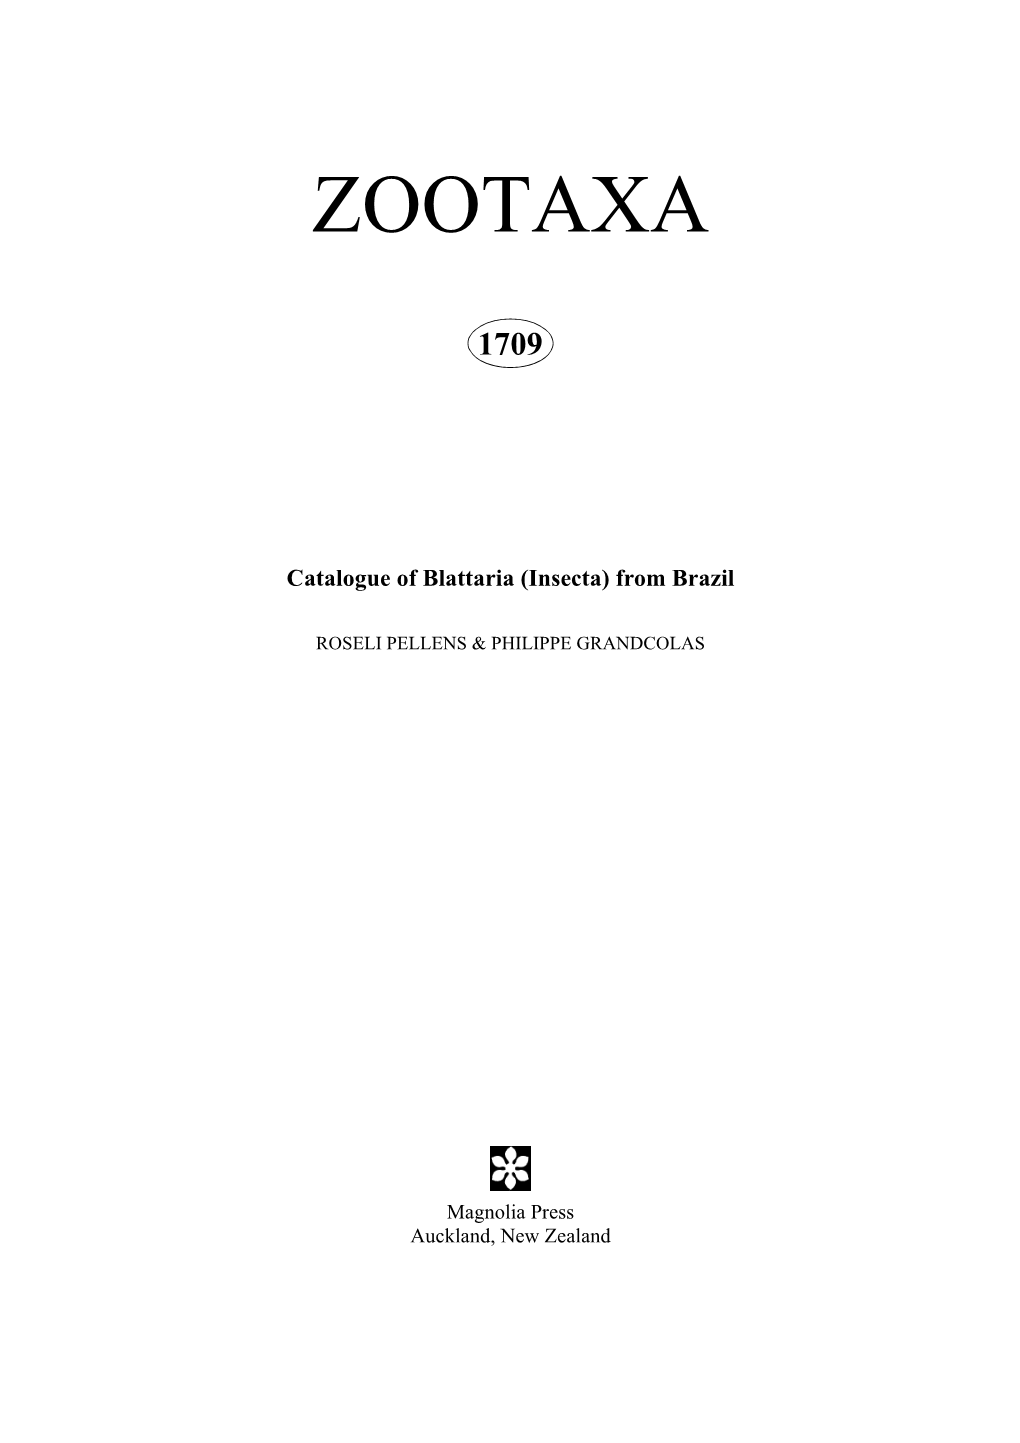 Zootaxa, Catalogue of Blattaria (Insecta) from Brazil